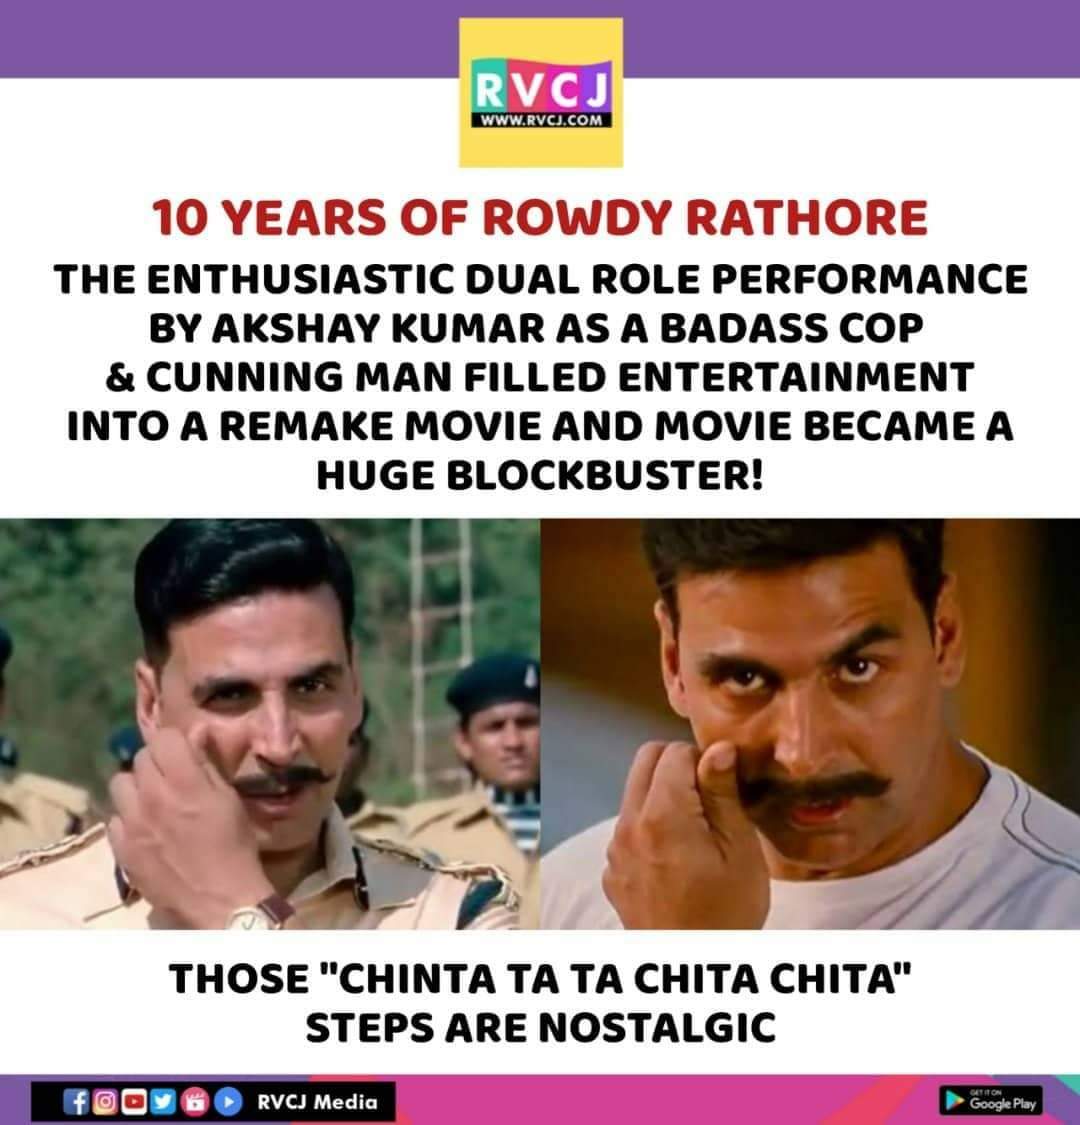 10 Years of Rowdy Rathore!

#rowdyrathore #akshaykumar #rvcjmovies #rvcjinsta